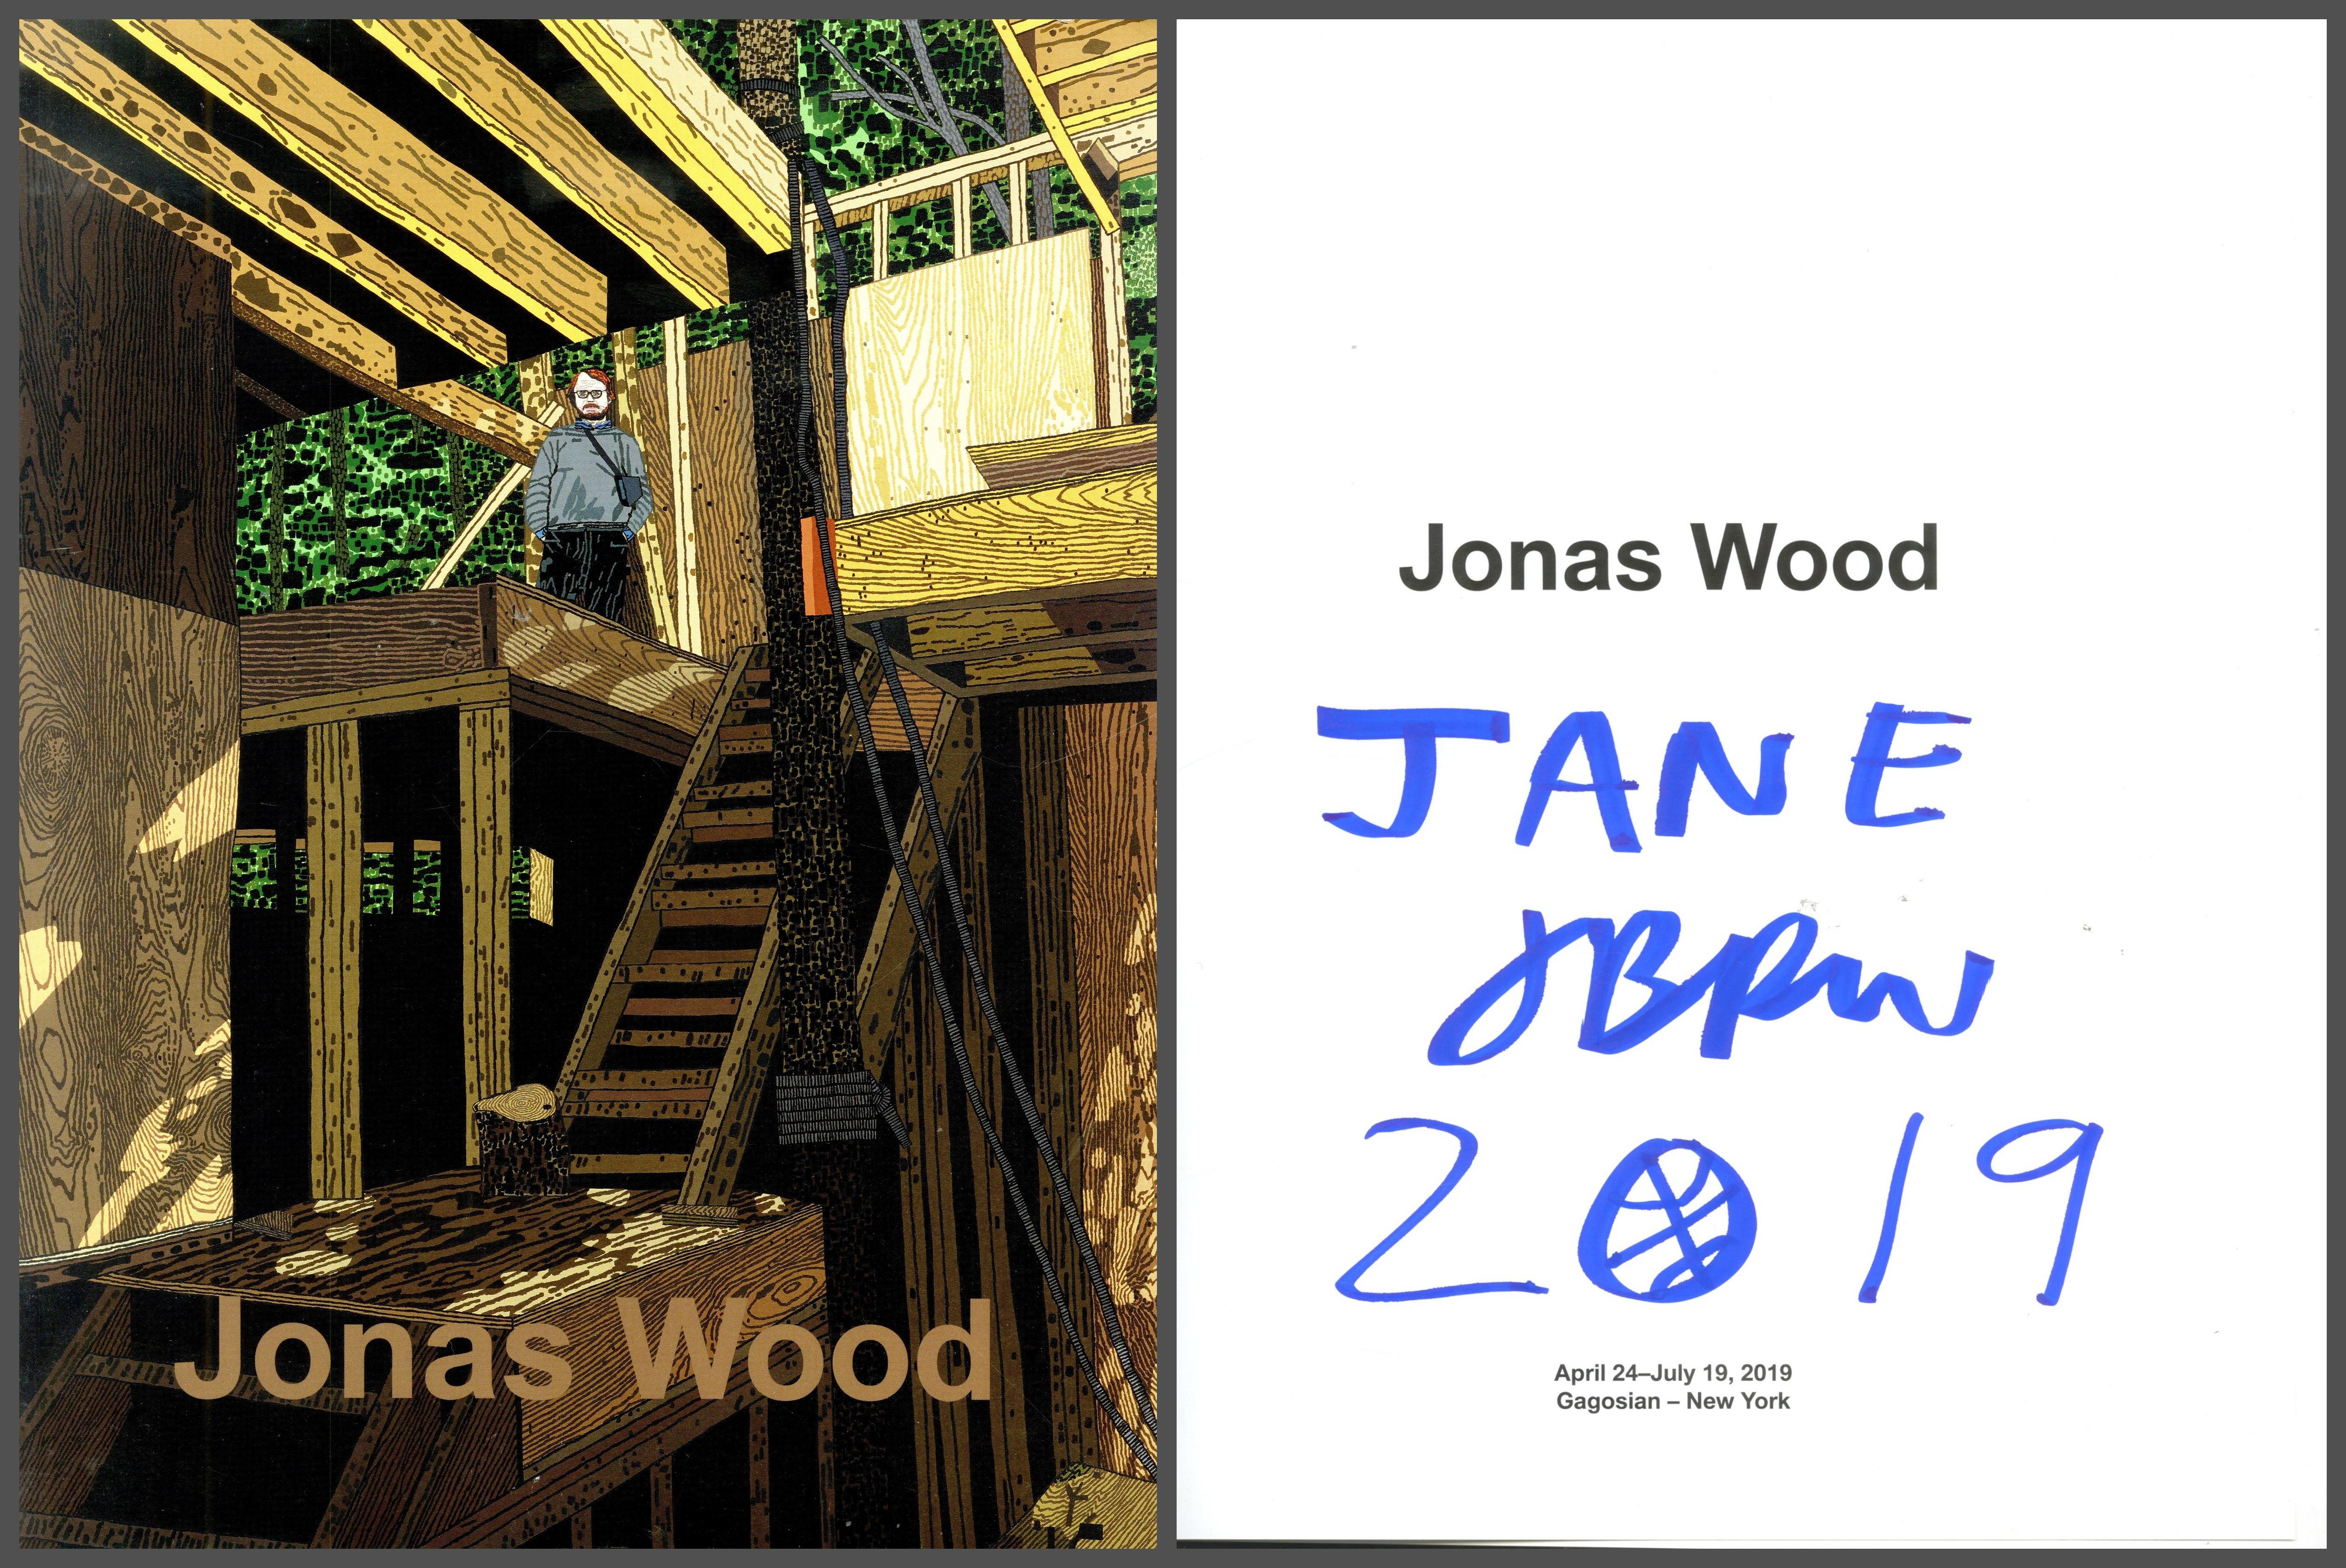 Jonas Wood Gemälde (handsigniert & beschriftet), 2019
Gagosian-Katalogmonografie, handsigniert, datiert und beschriftet mit Jane
Handsigniert, datiert und beschriftet von Jonas Wood an Jane, mit dem Markenzeichen des Künstlers, dem Basketball, im